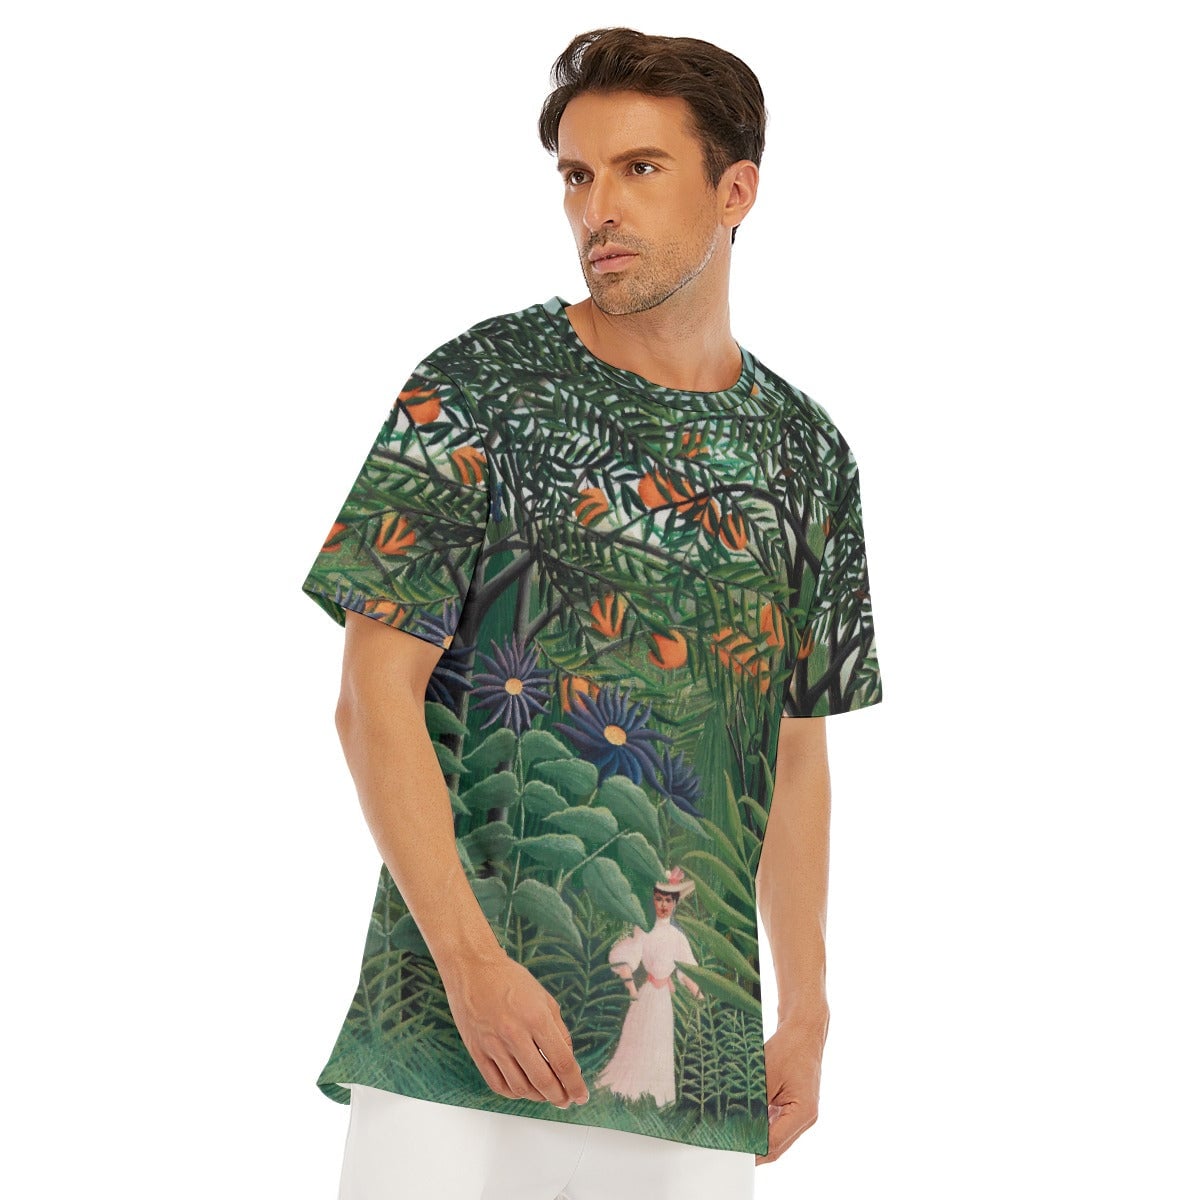 Henri Rousseau’s Woman Walking in an Exotic Forest T-Shirt